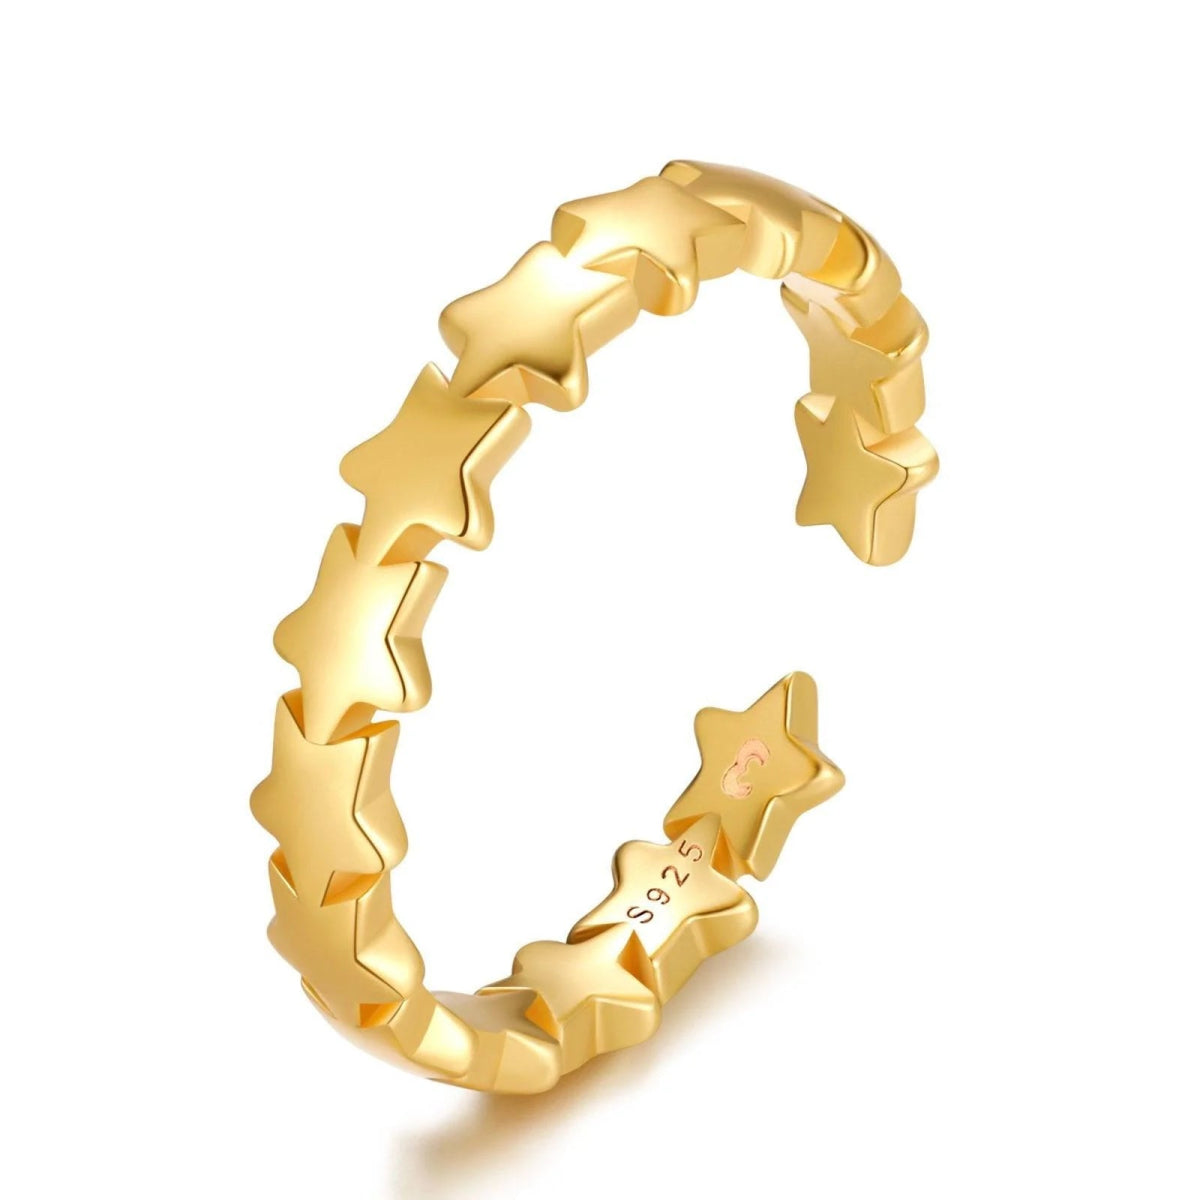 "Scintillate" Midi Ring - Milas Jewels Shop